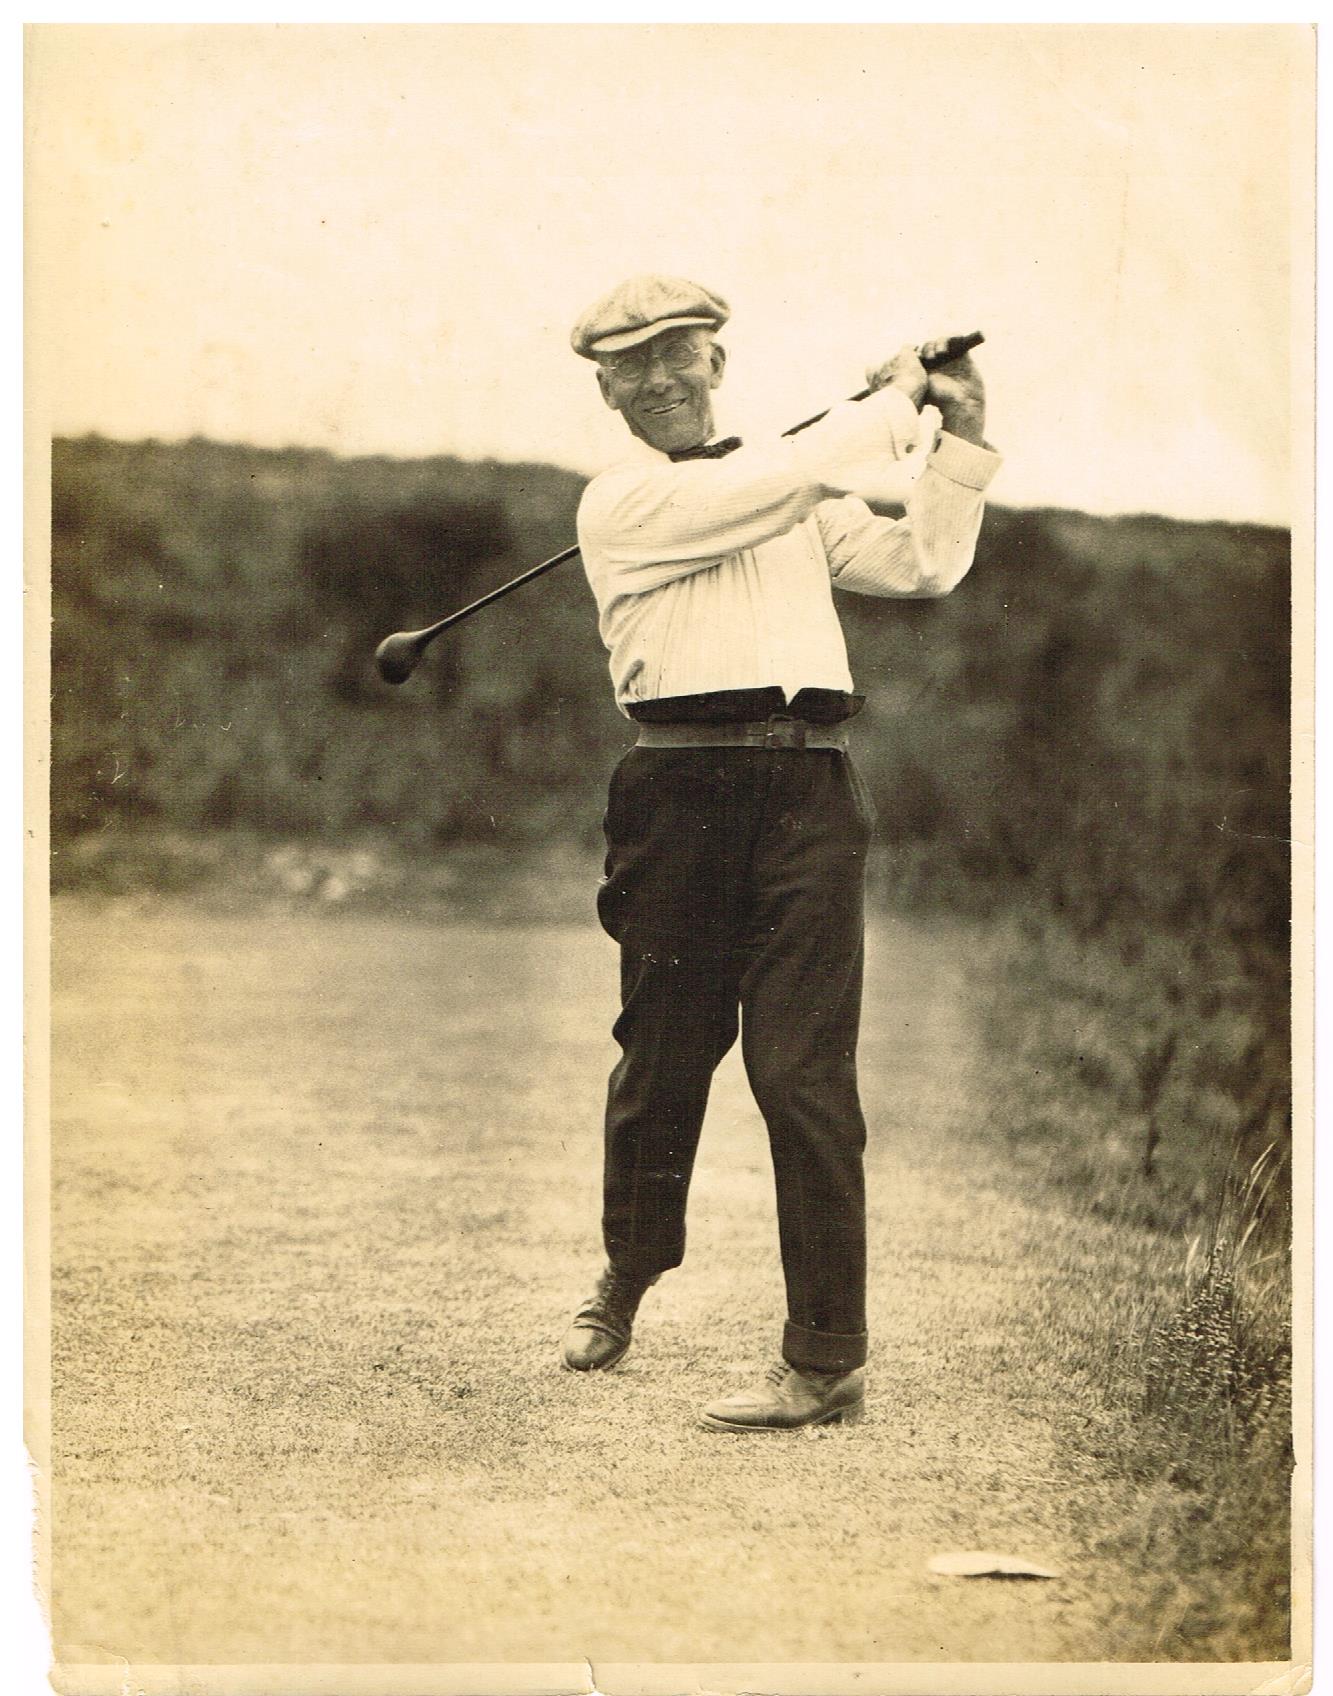 G J Wilkinson at Manly Golf Club